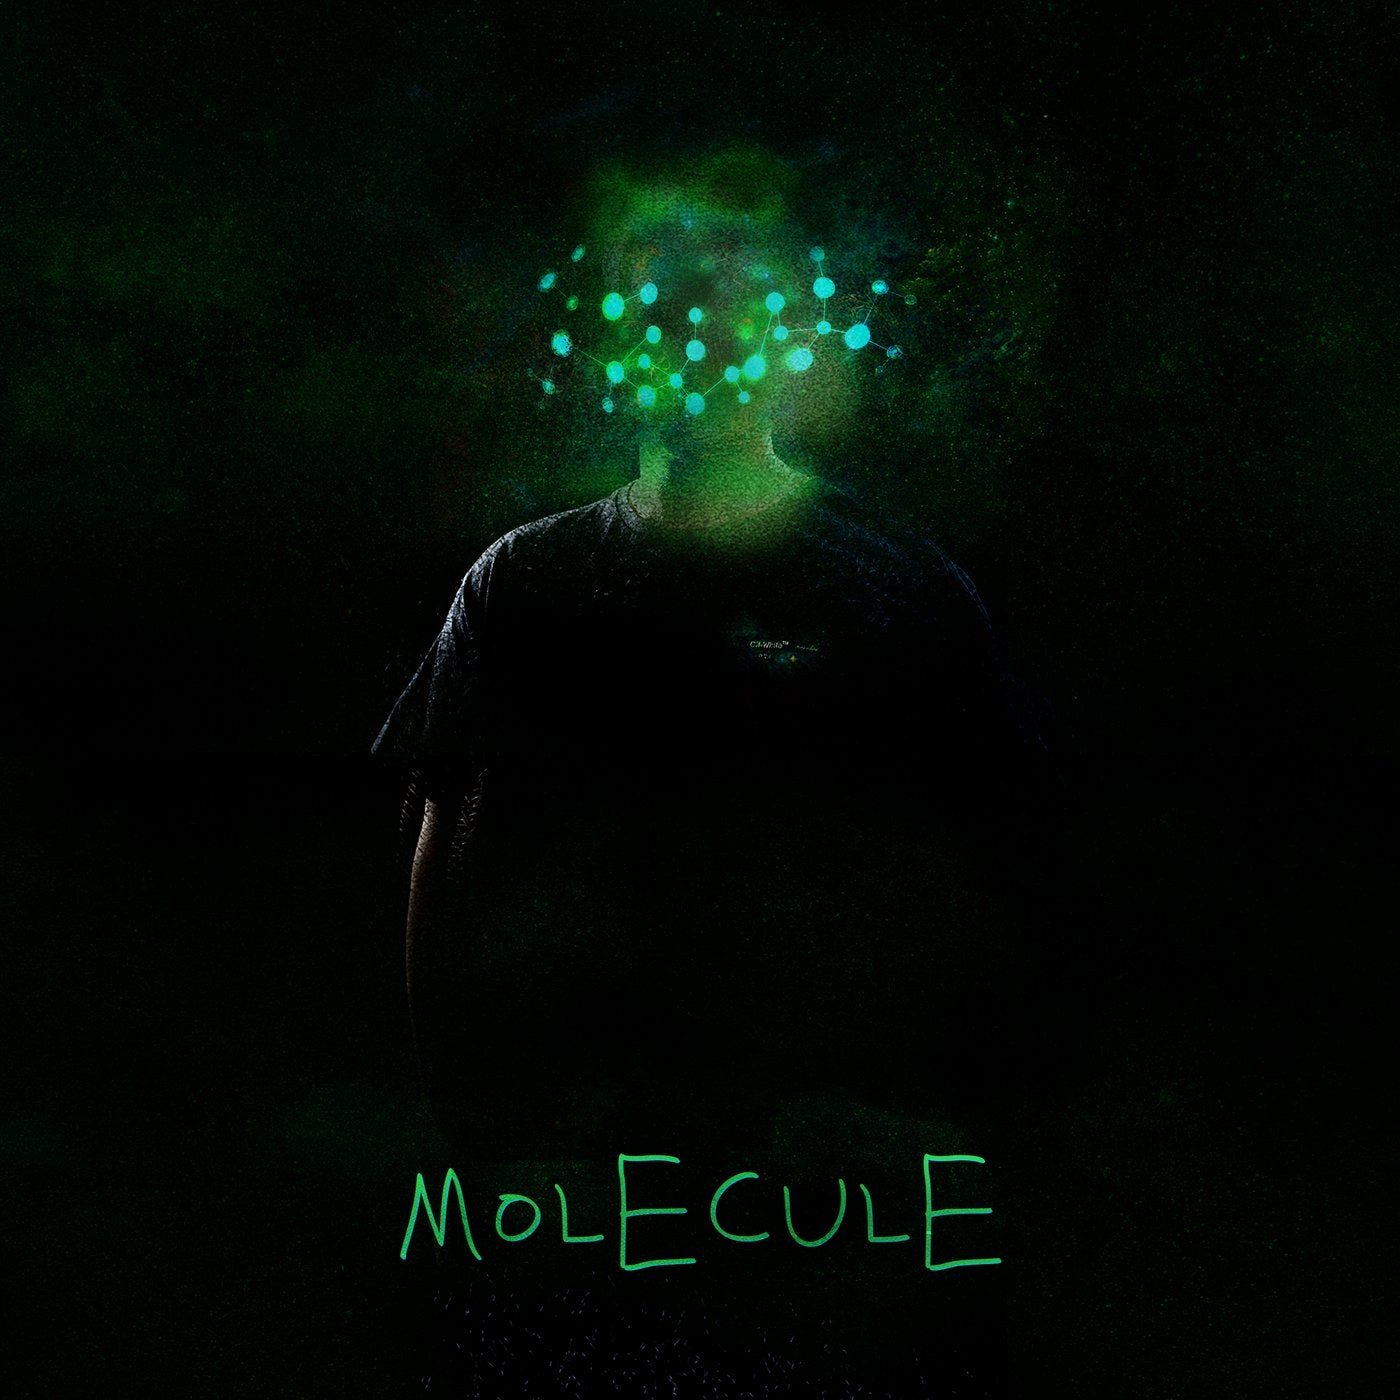 Molecule (Extended Version)